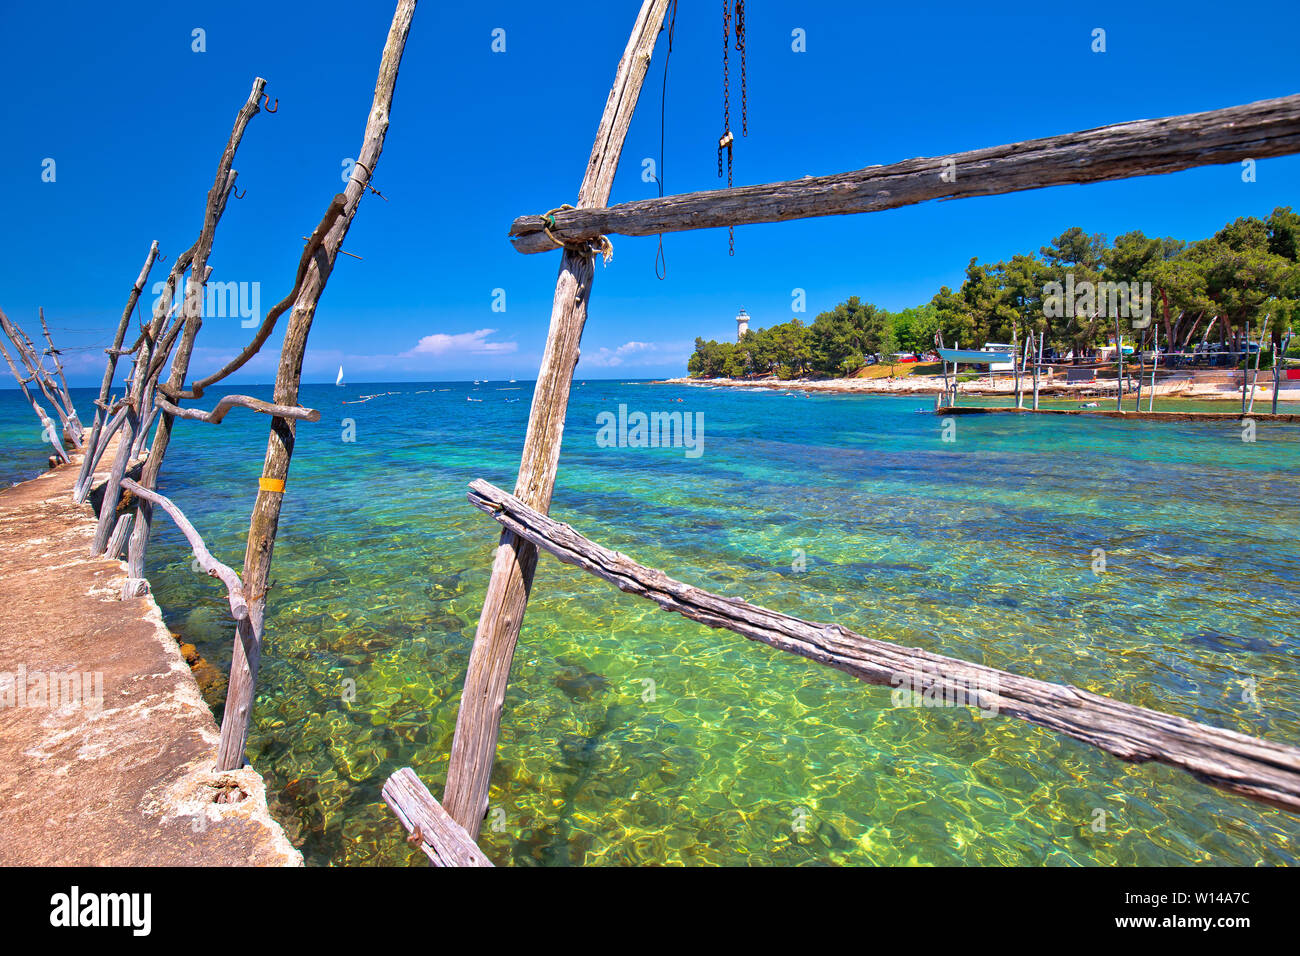 Savudrija turquoise beach and wooden boat holders view, Istria regin of Croatia Stock Photo